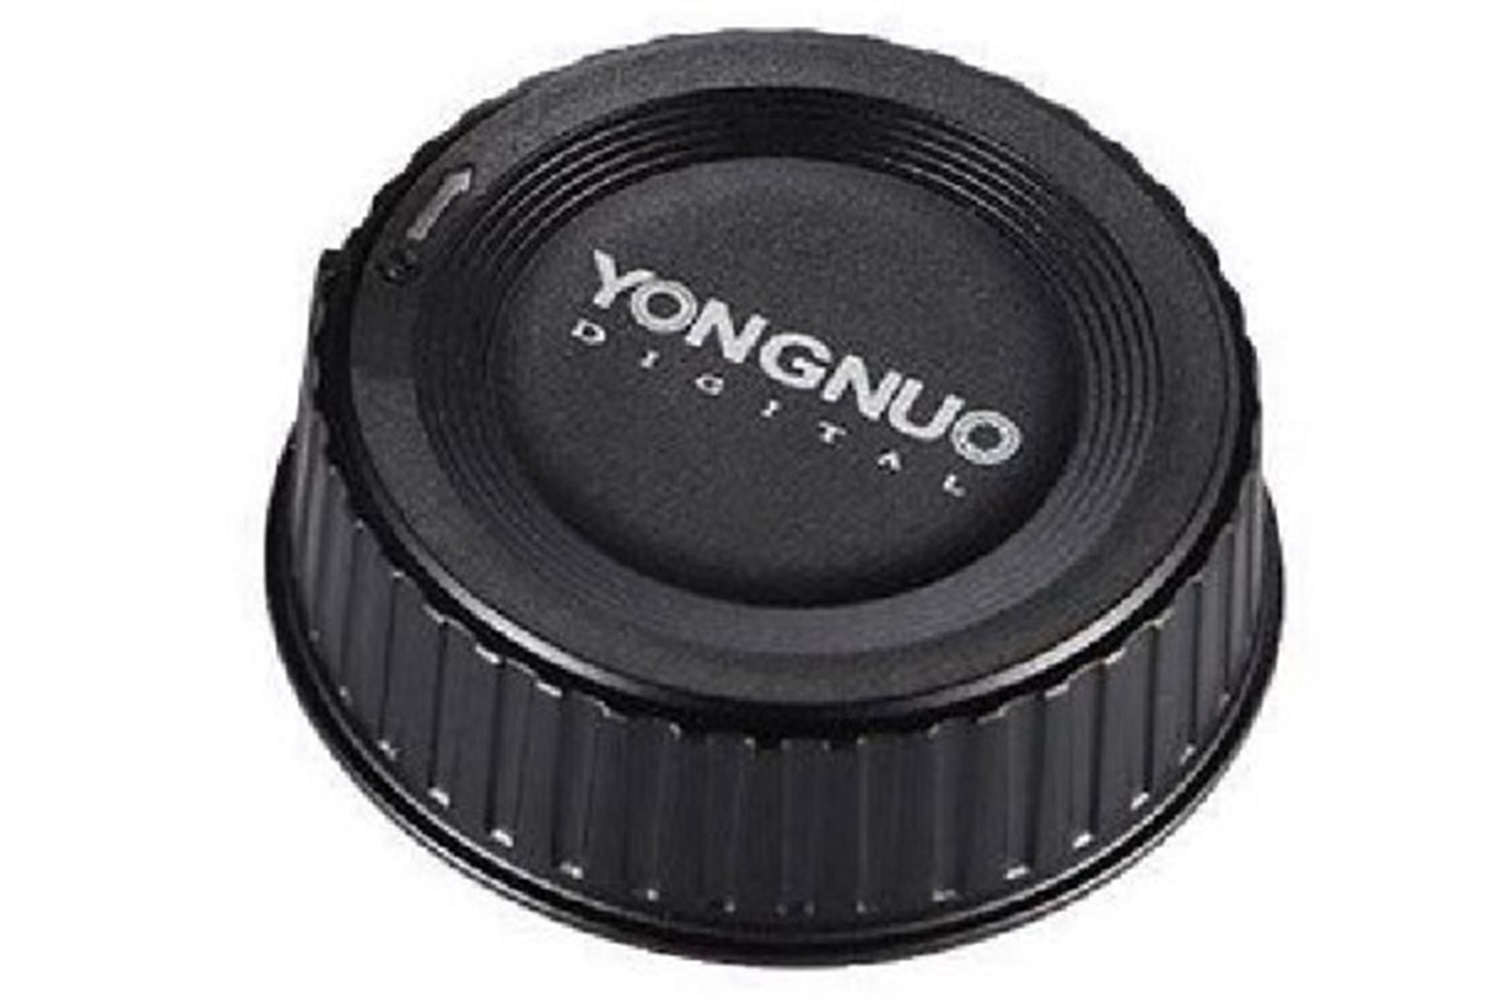 Yongnuo Canon Lens Uyumlu Arka Kapak